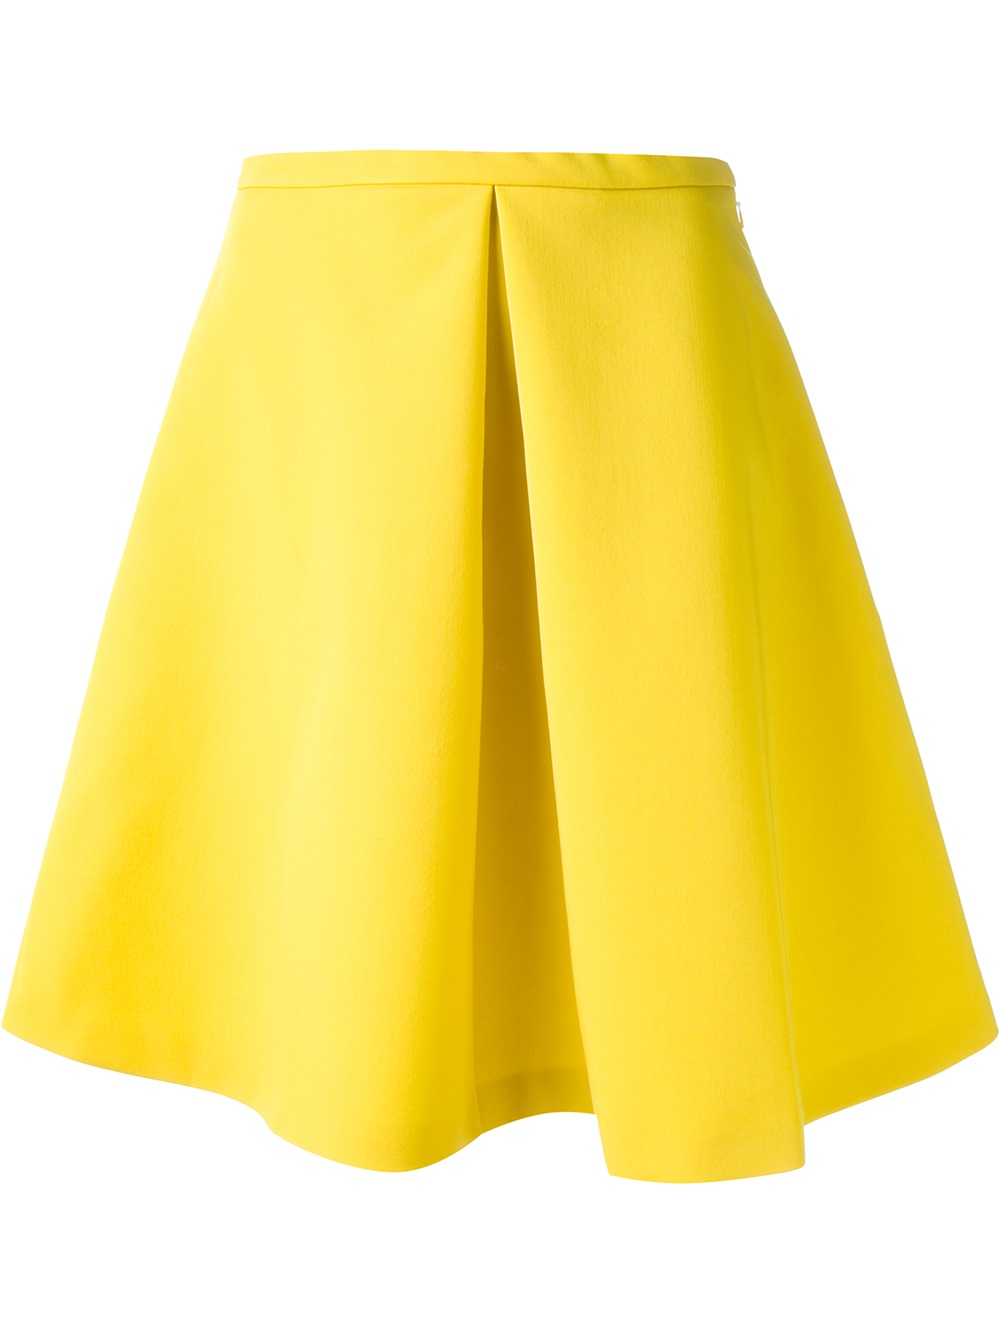 Lyst - Antonio Marras Flared Skirt in Yellow